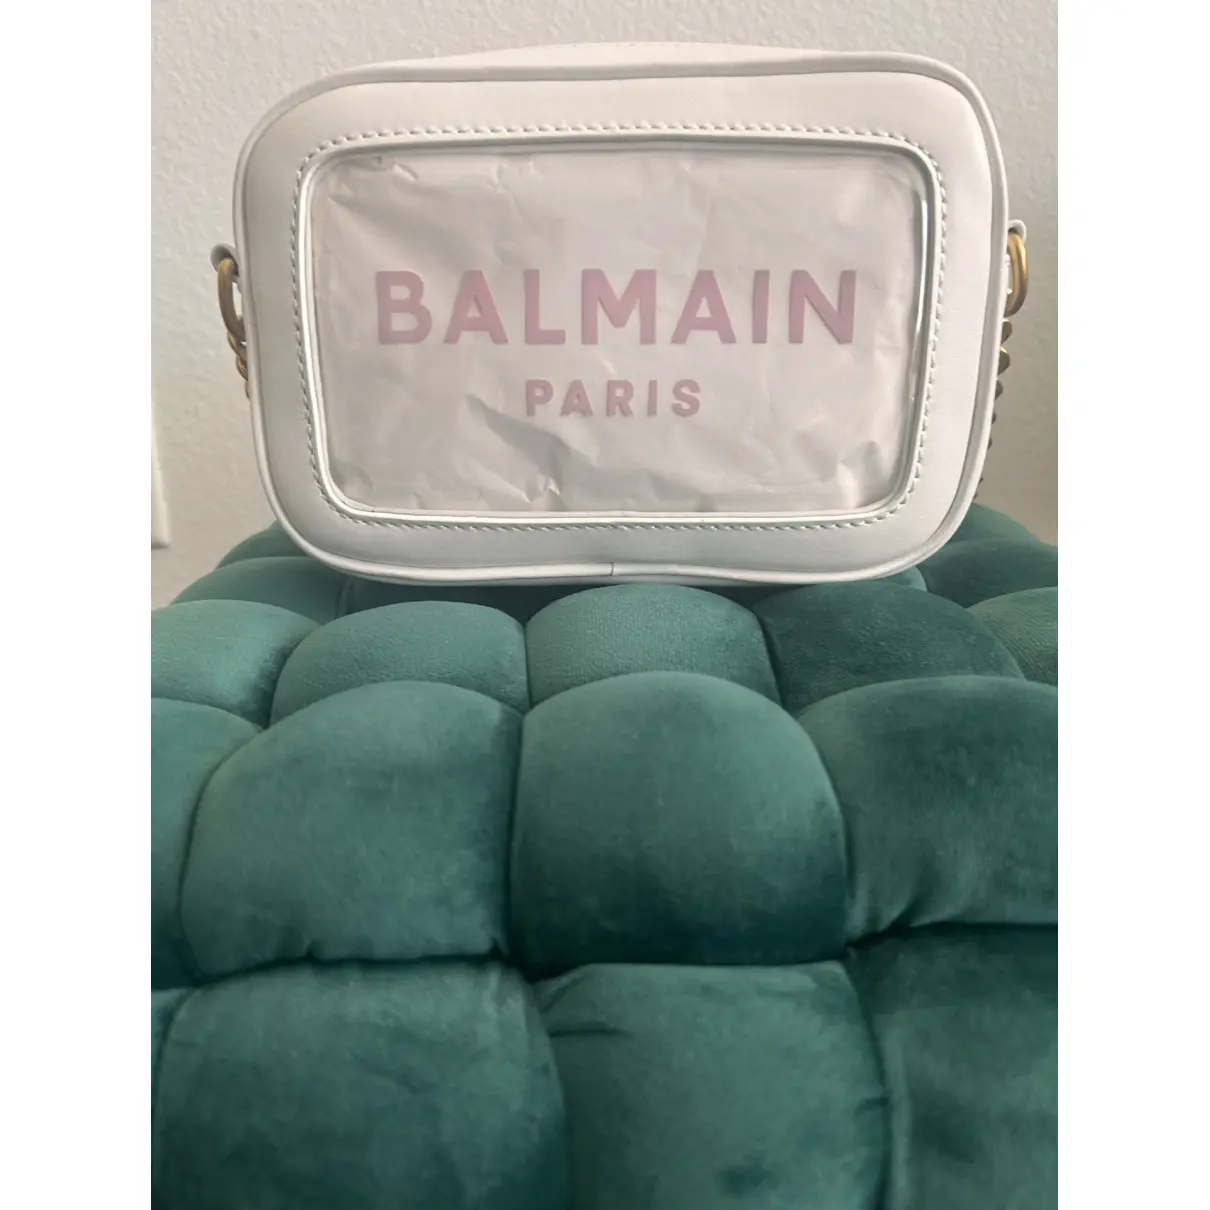 Buy Balmain Vegan leather clutch bag online